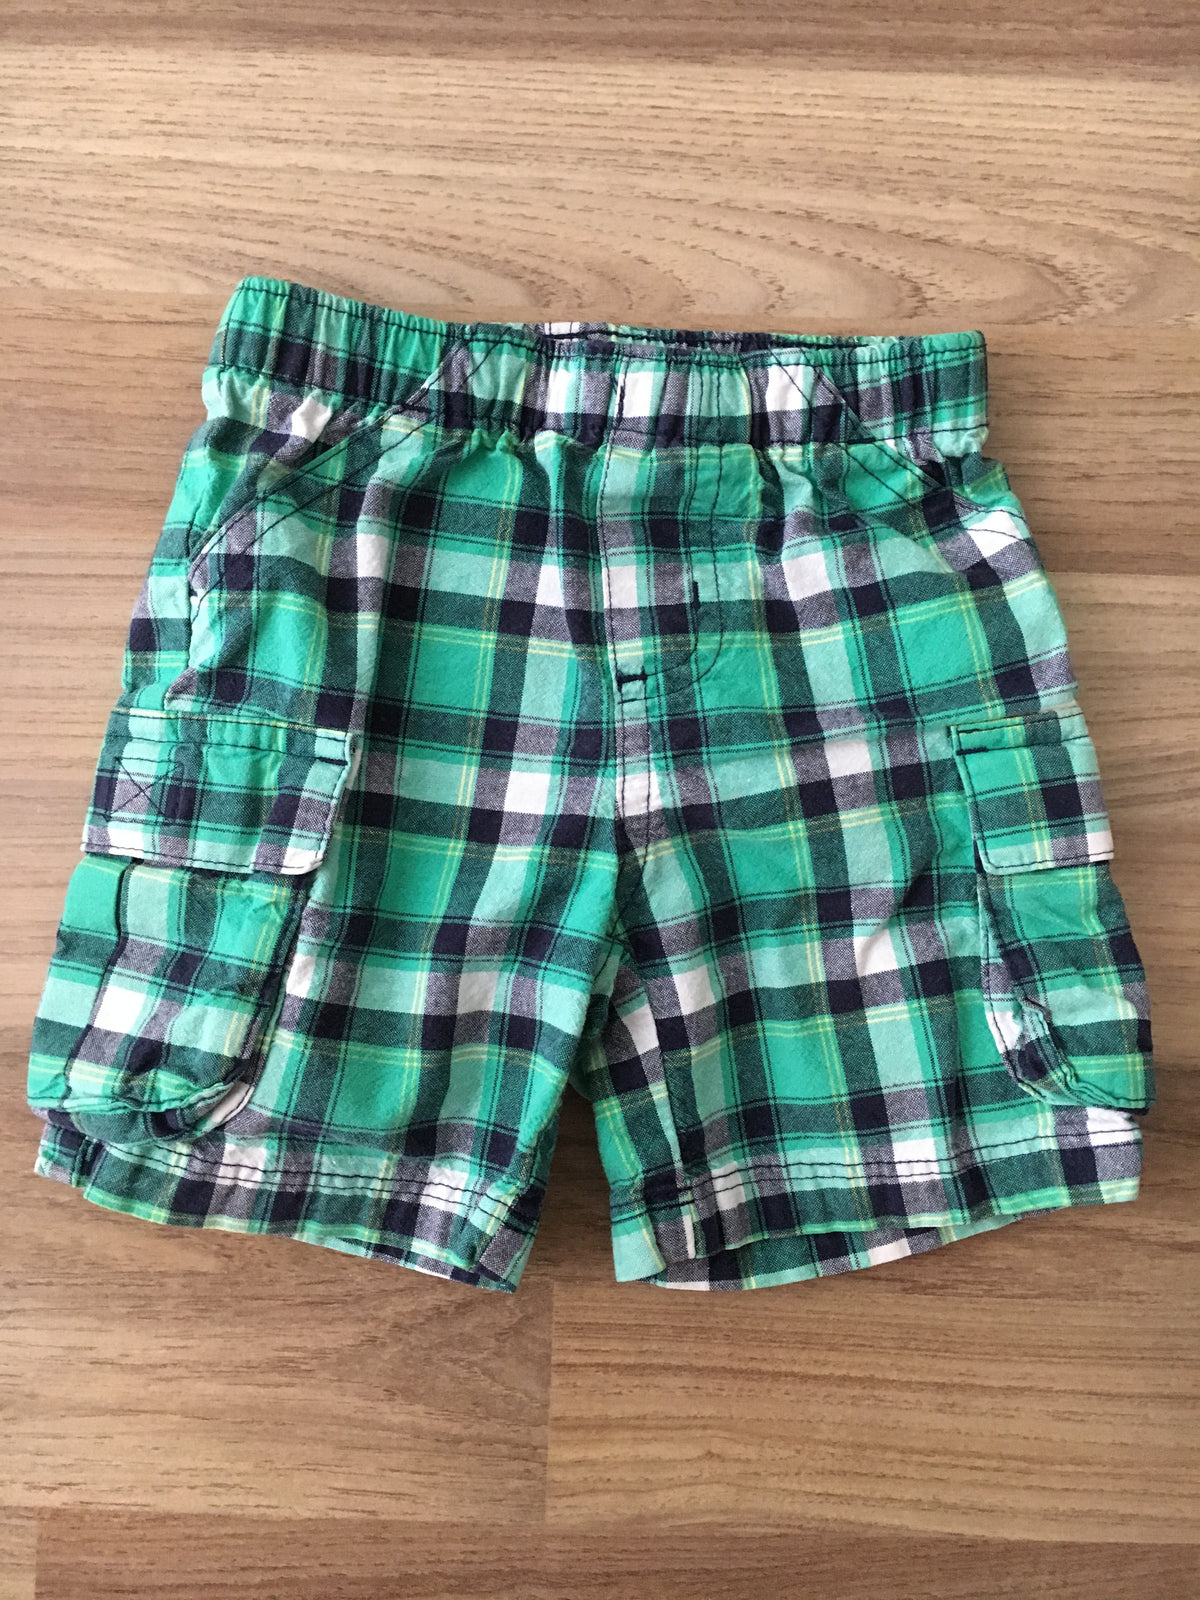 Shorts (Boys Size 12M)